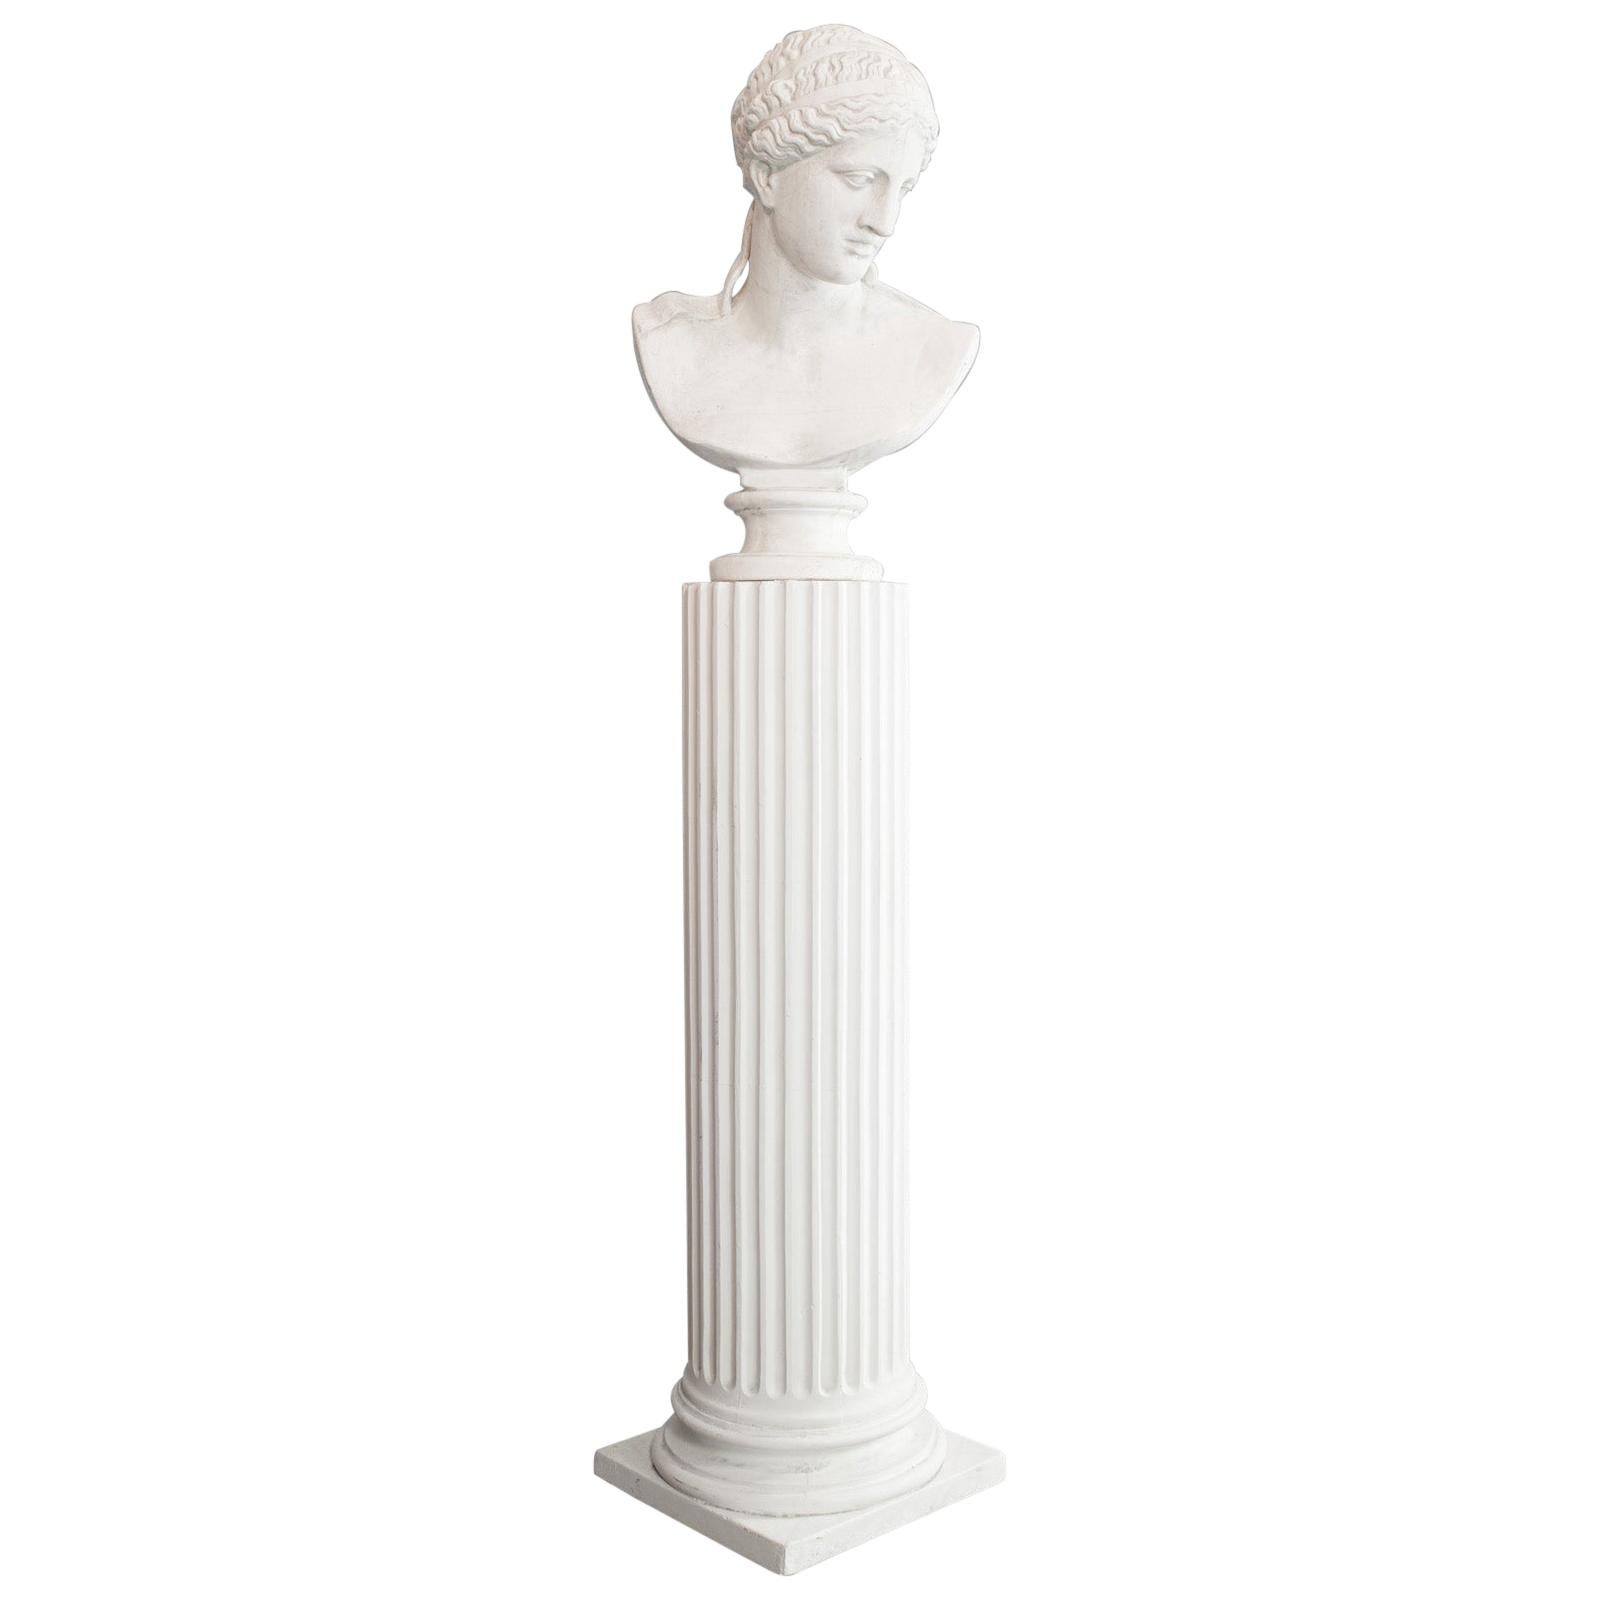 Vintage Bust on Pedestal, English, Plaster, Female Portrait, Doric Column